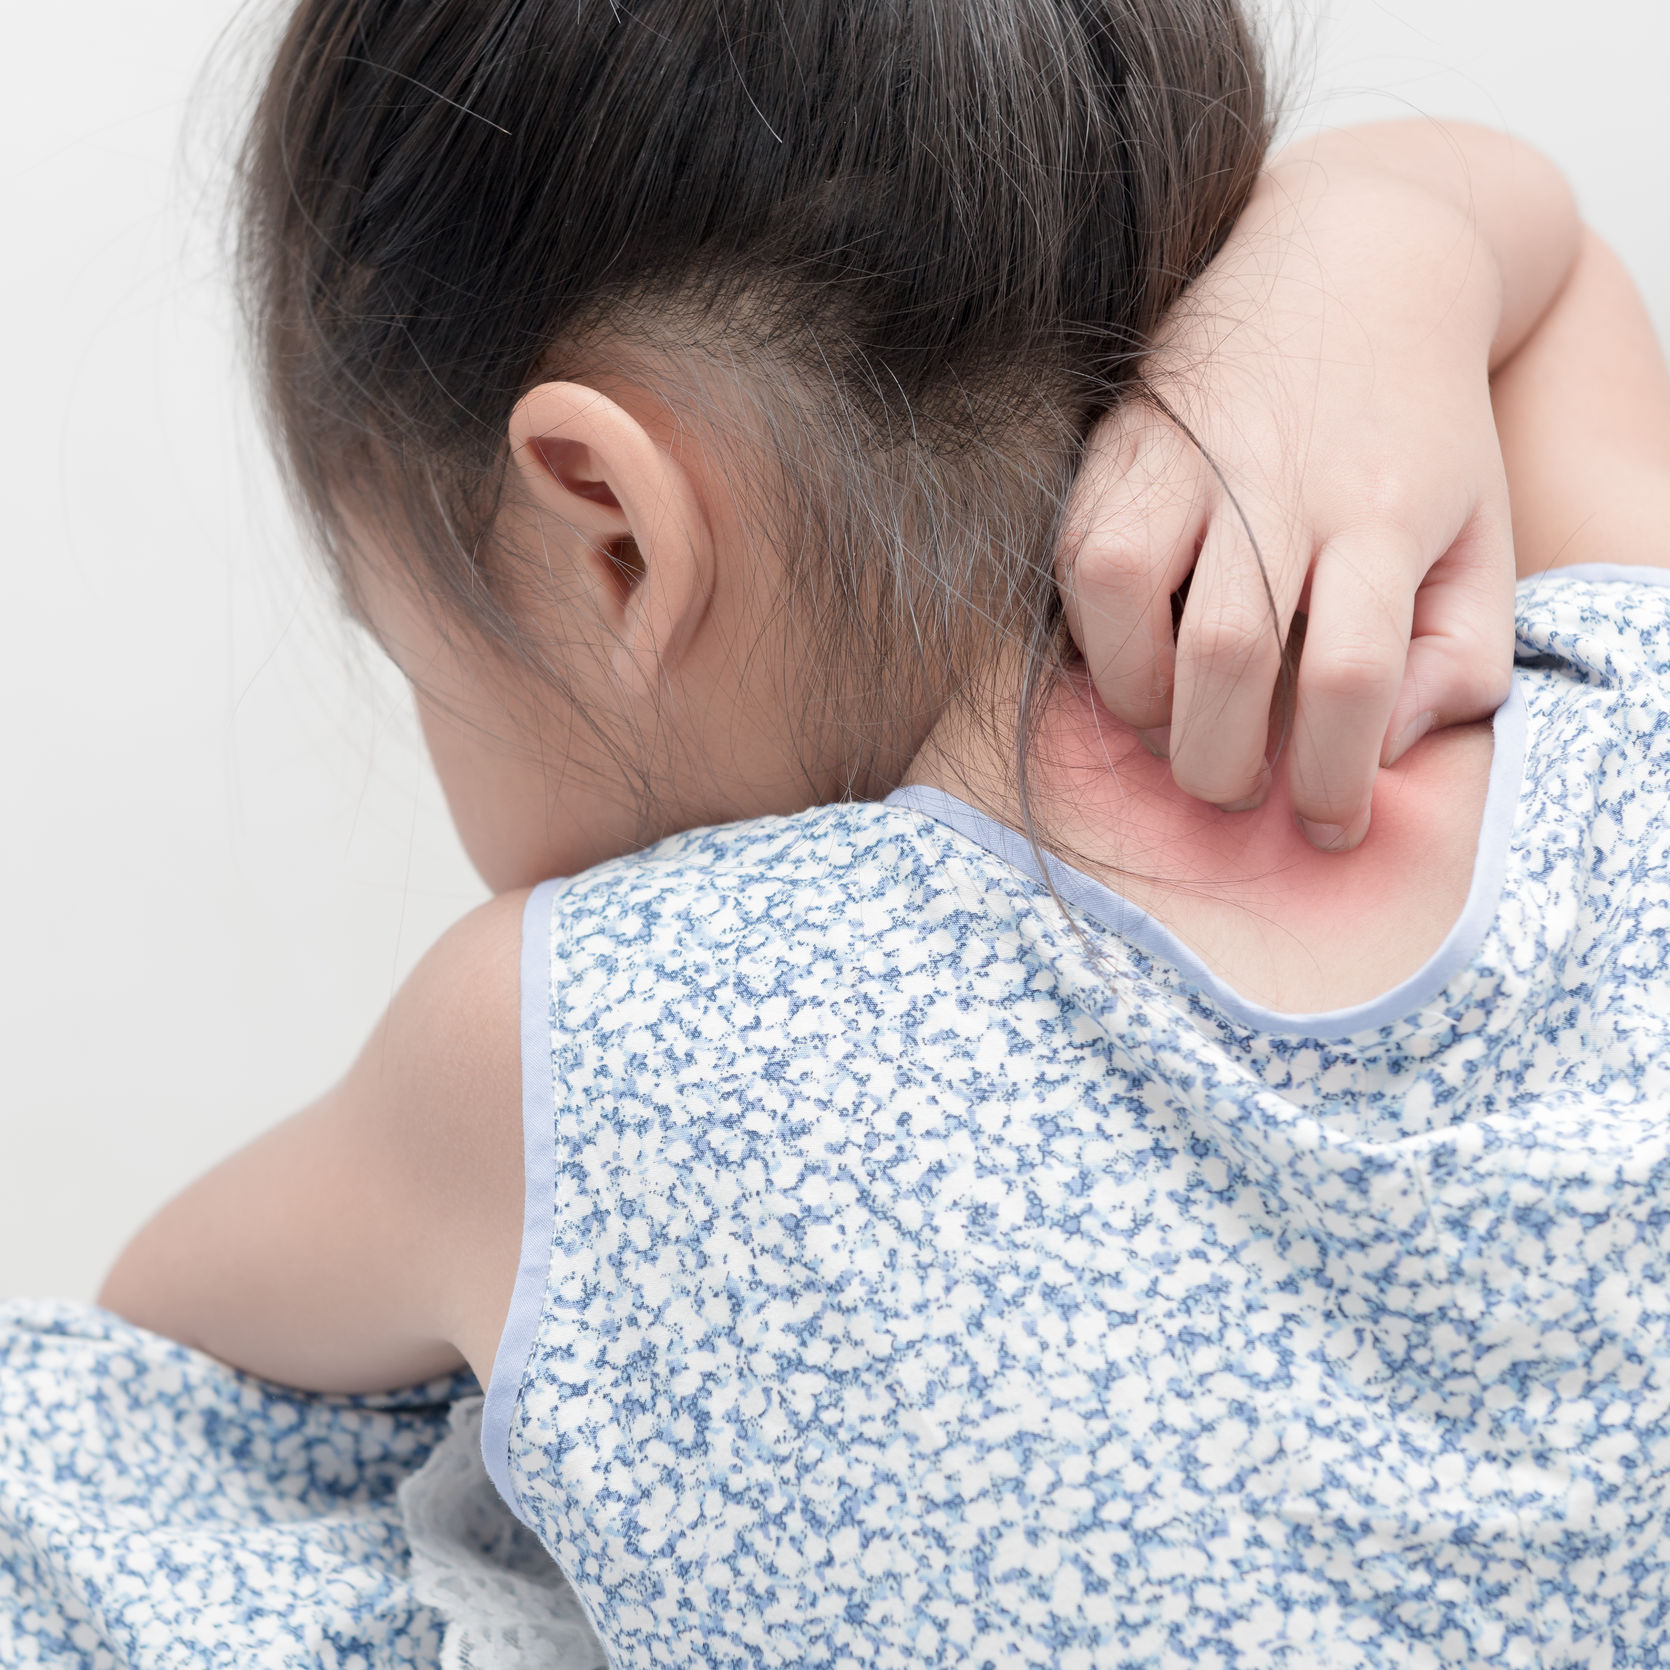 New Study: Eczema Reduces Children’s Sleep Quality